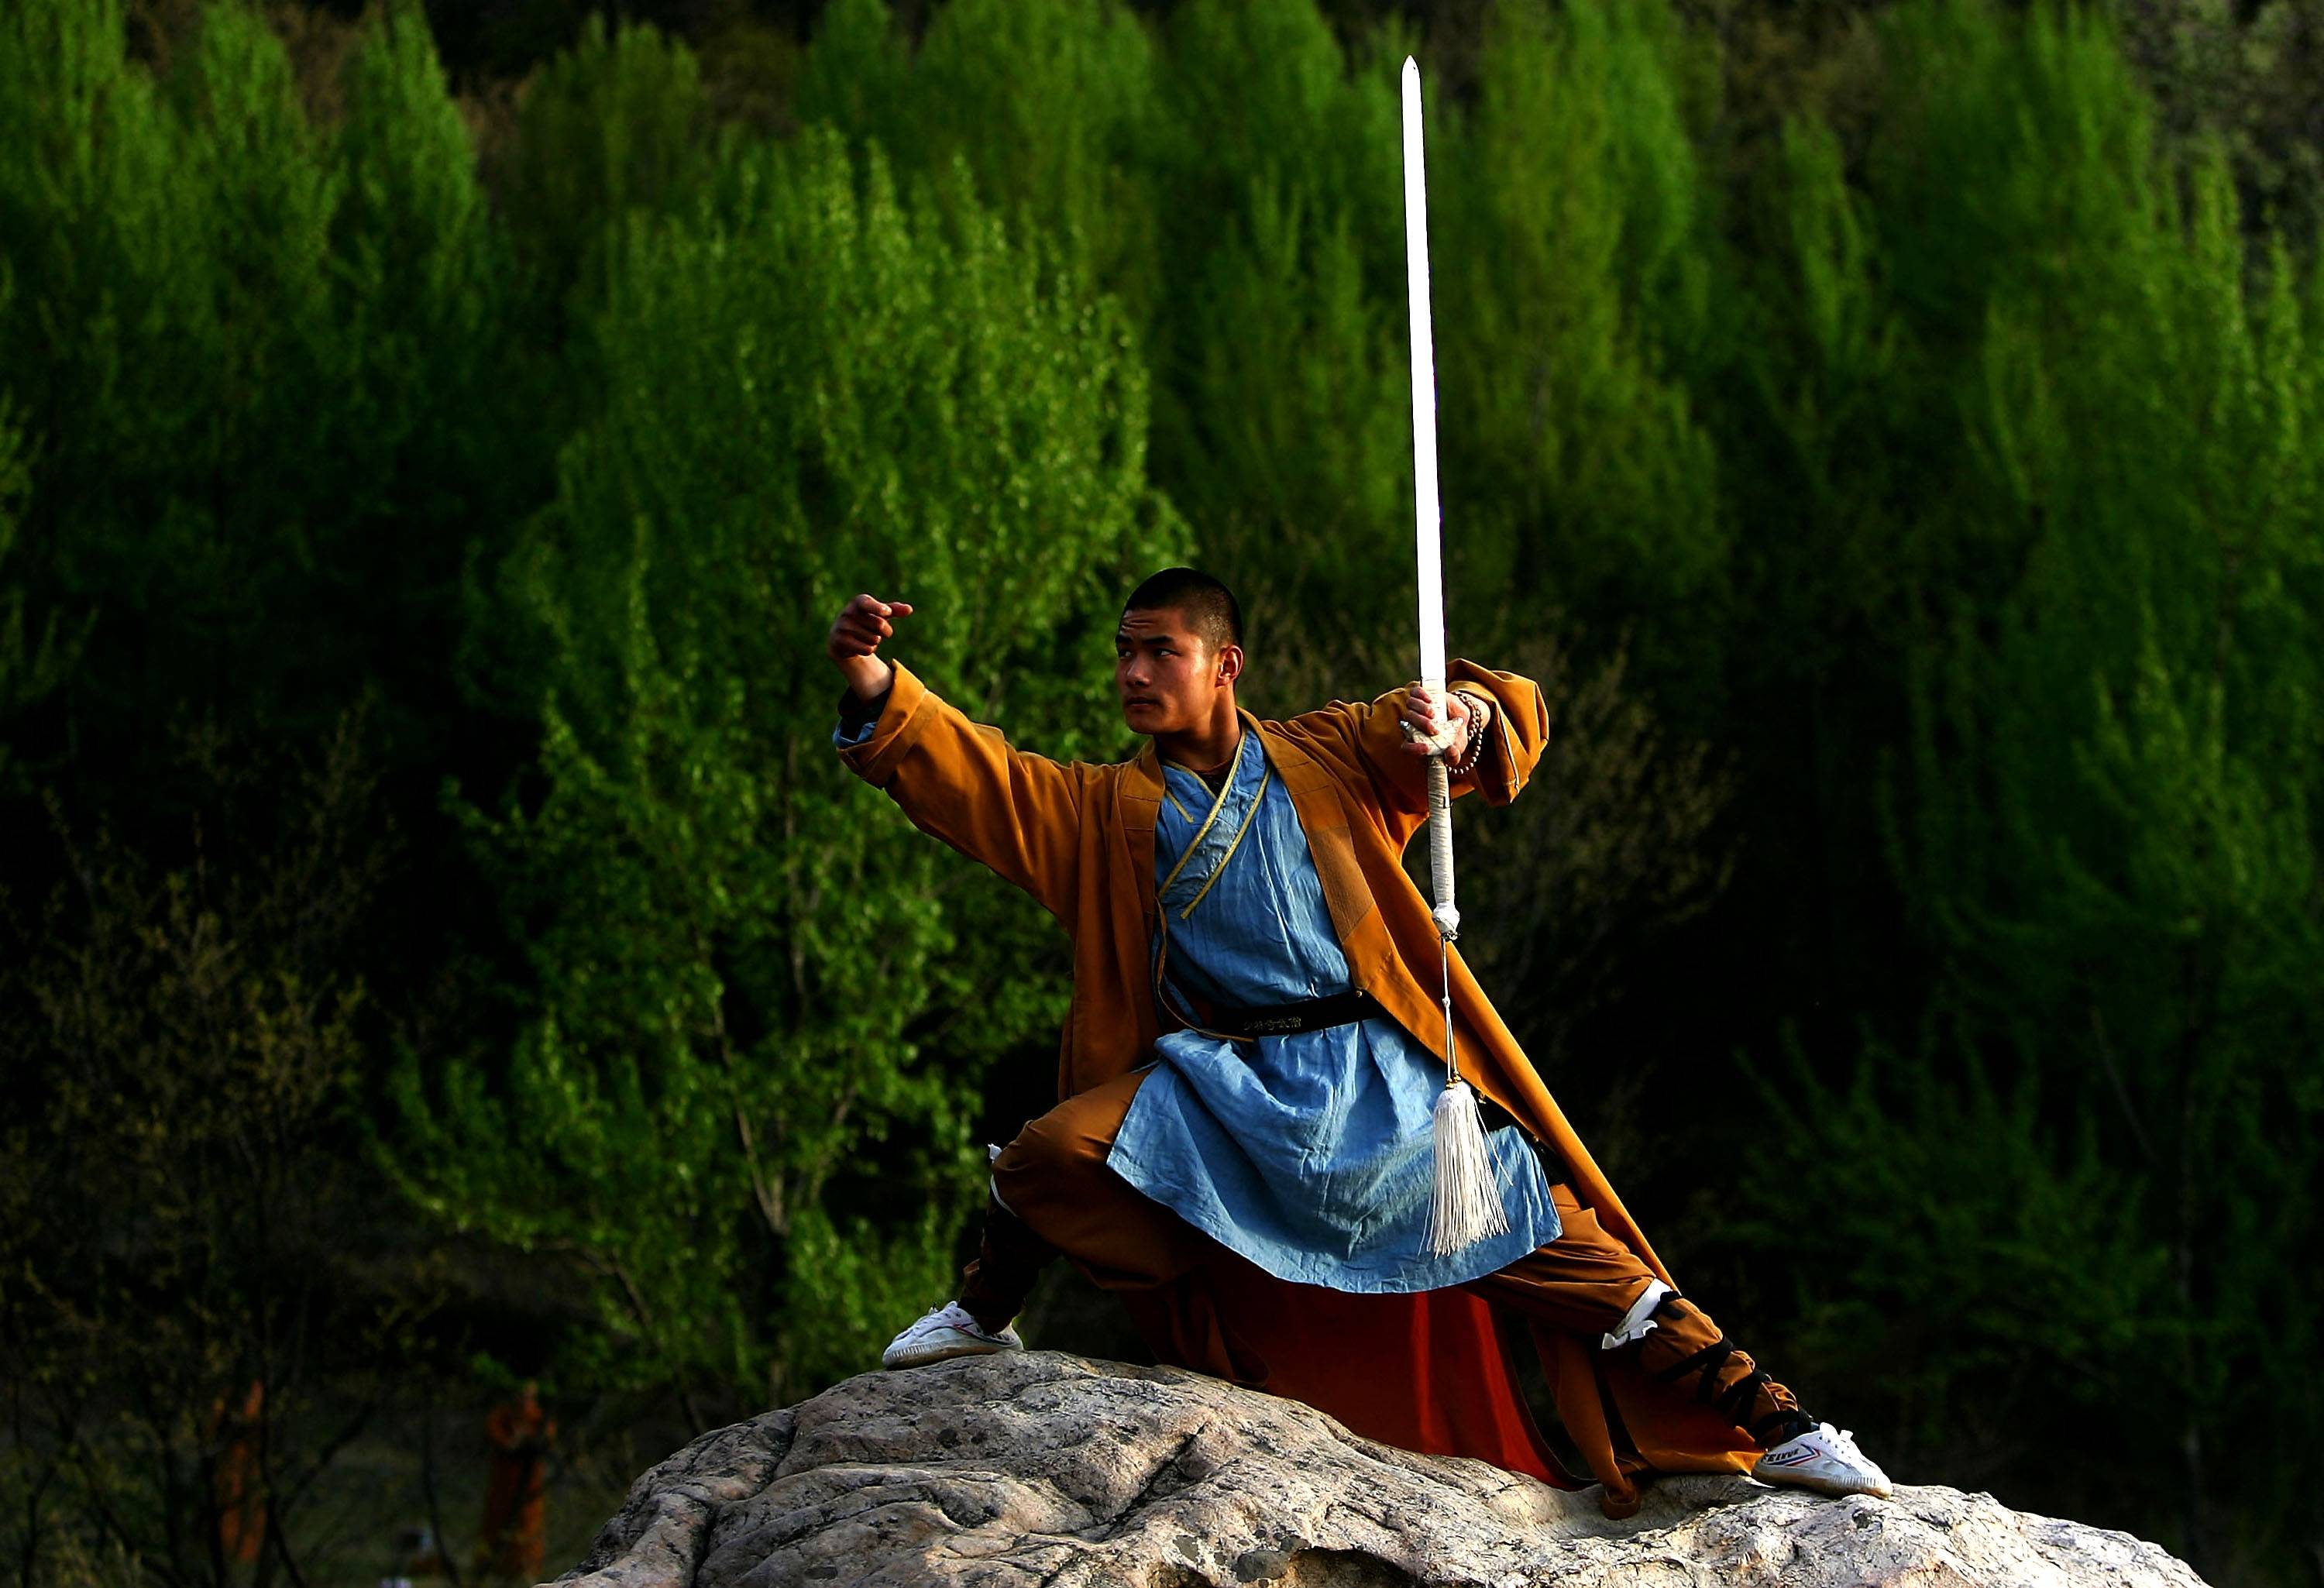 shaolin kung fu tapete,urwald,baum,regenwald,wald,pflanze